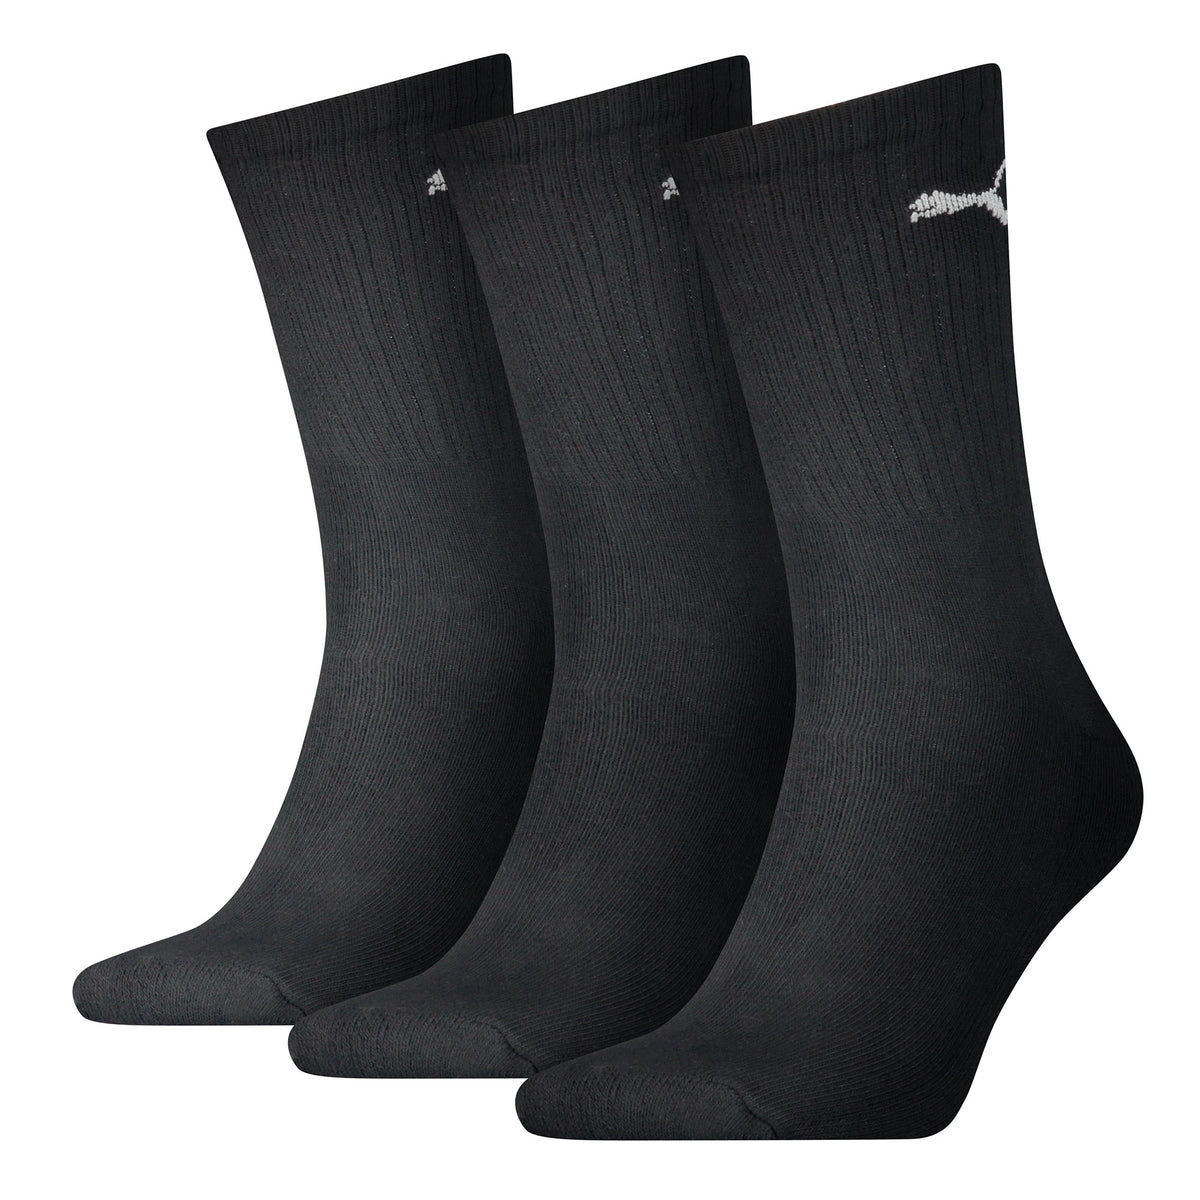 Crew sports socks &amp; leisure socks 3 pair pack